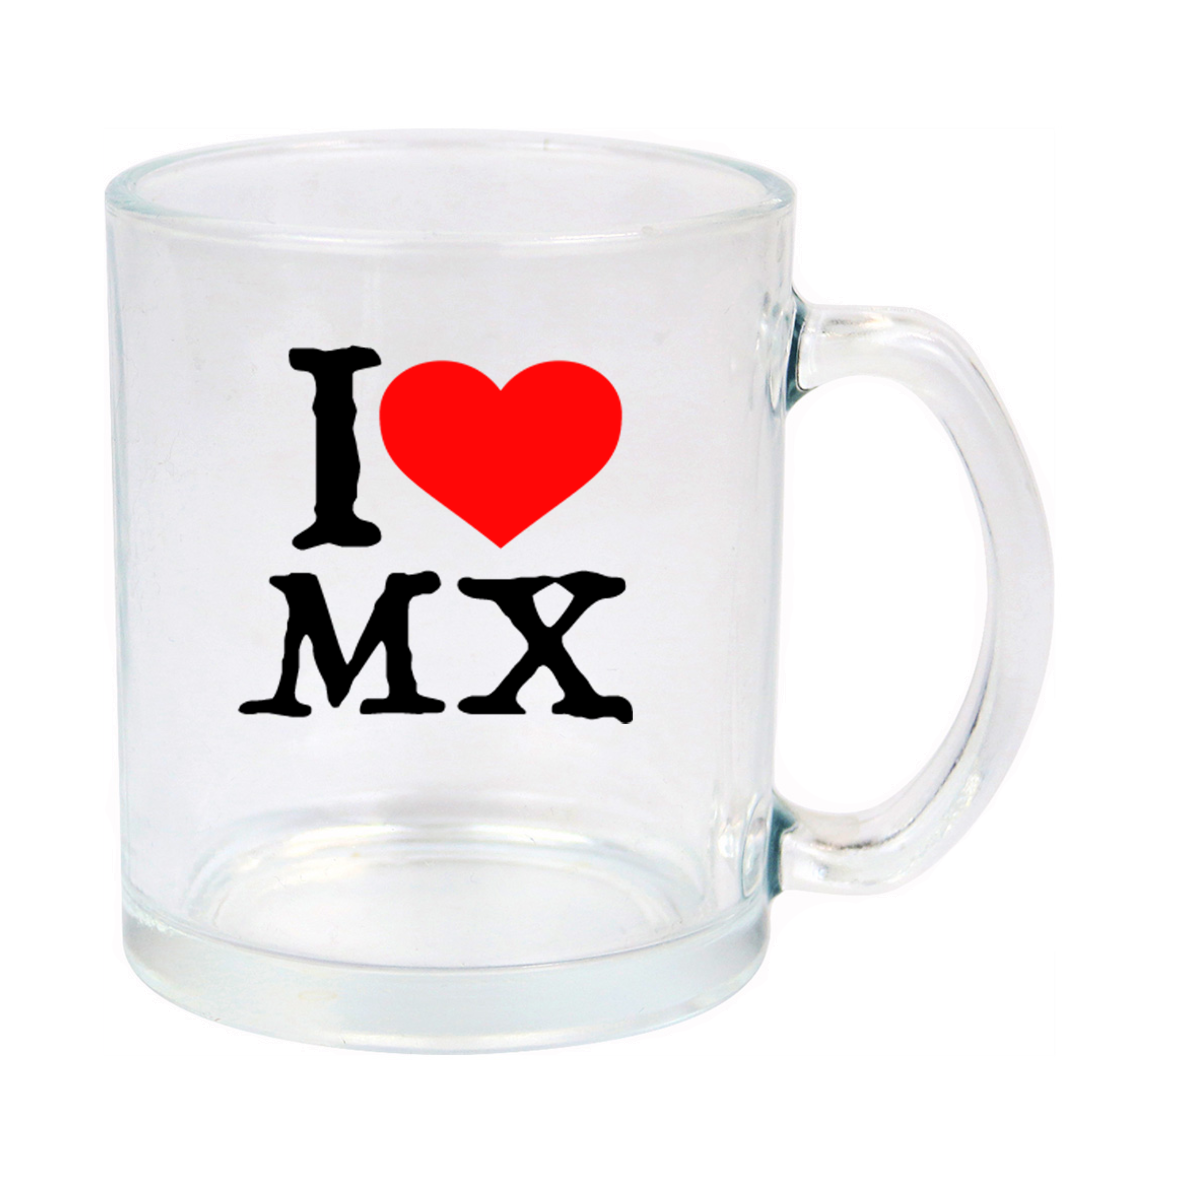 AGAD Turista (I Love Mexico Glass Mug)